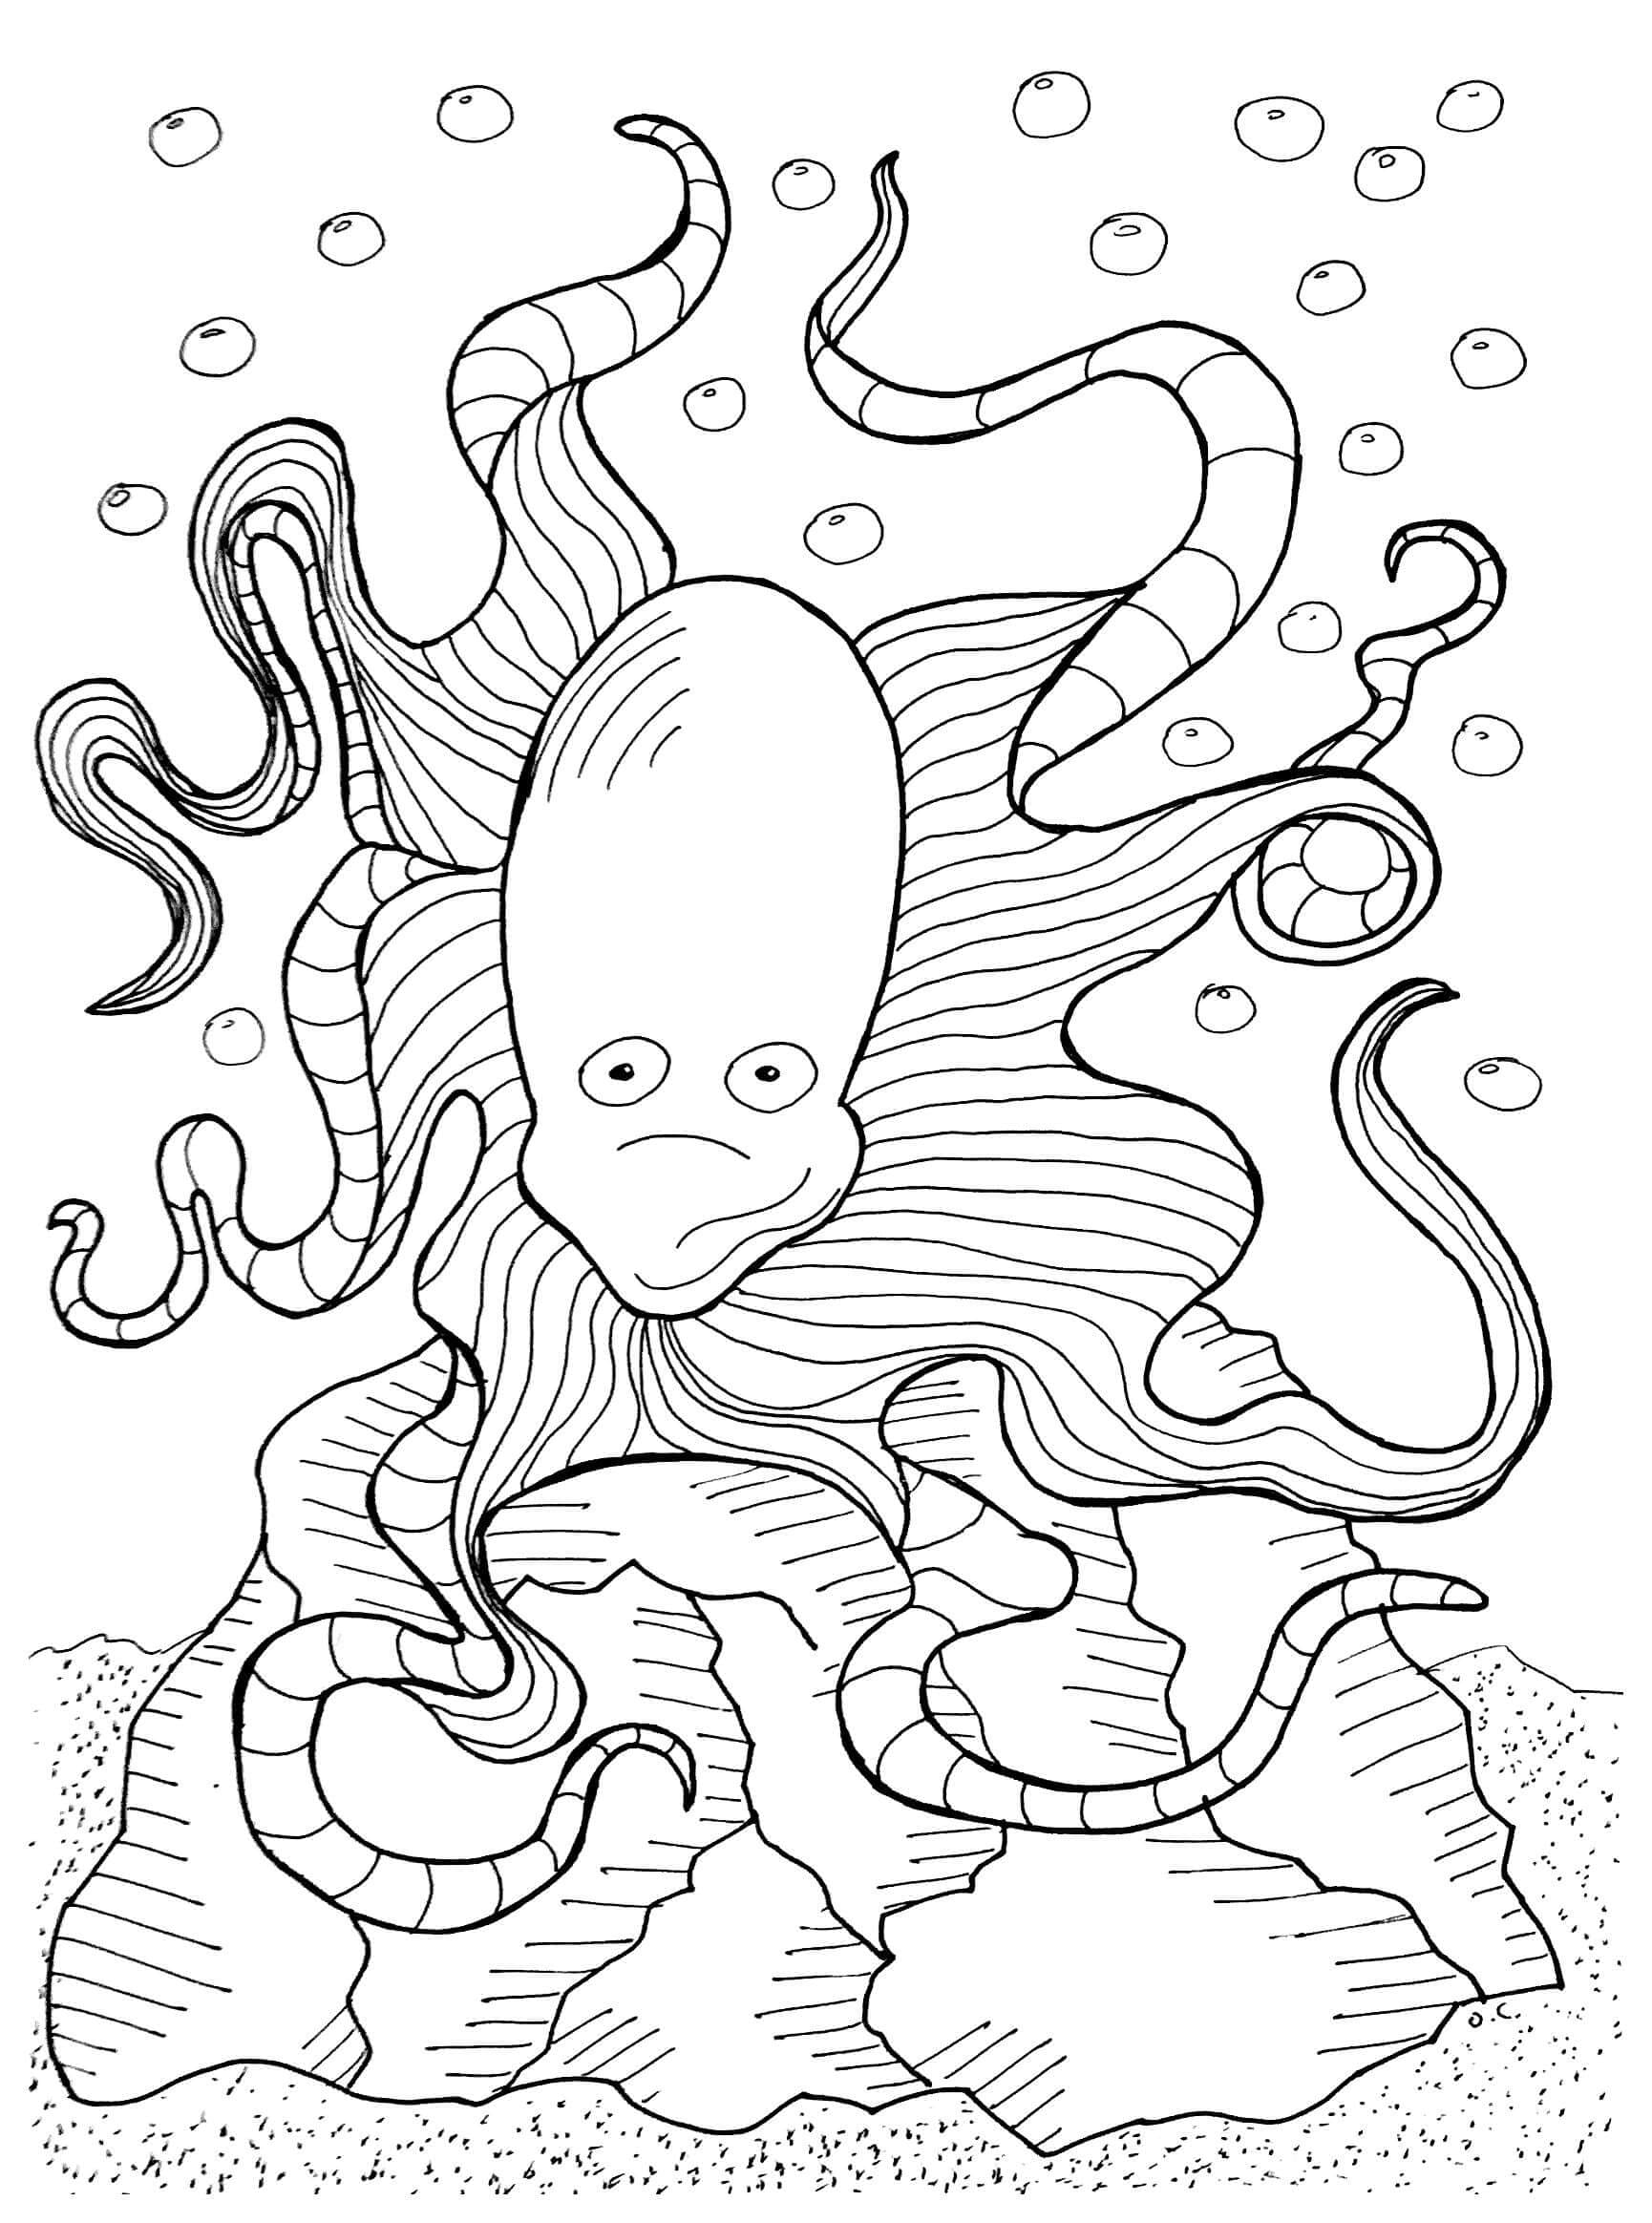 Enge octopus